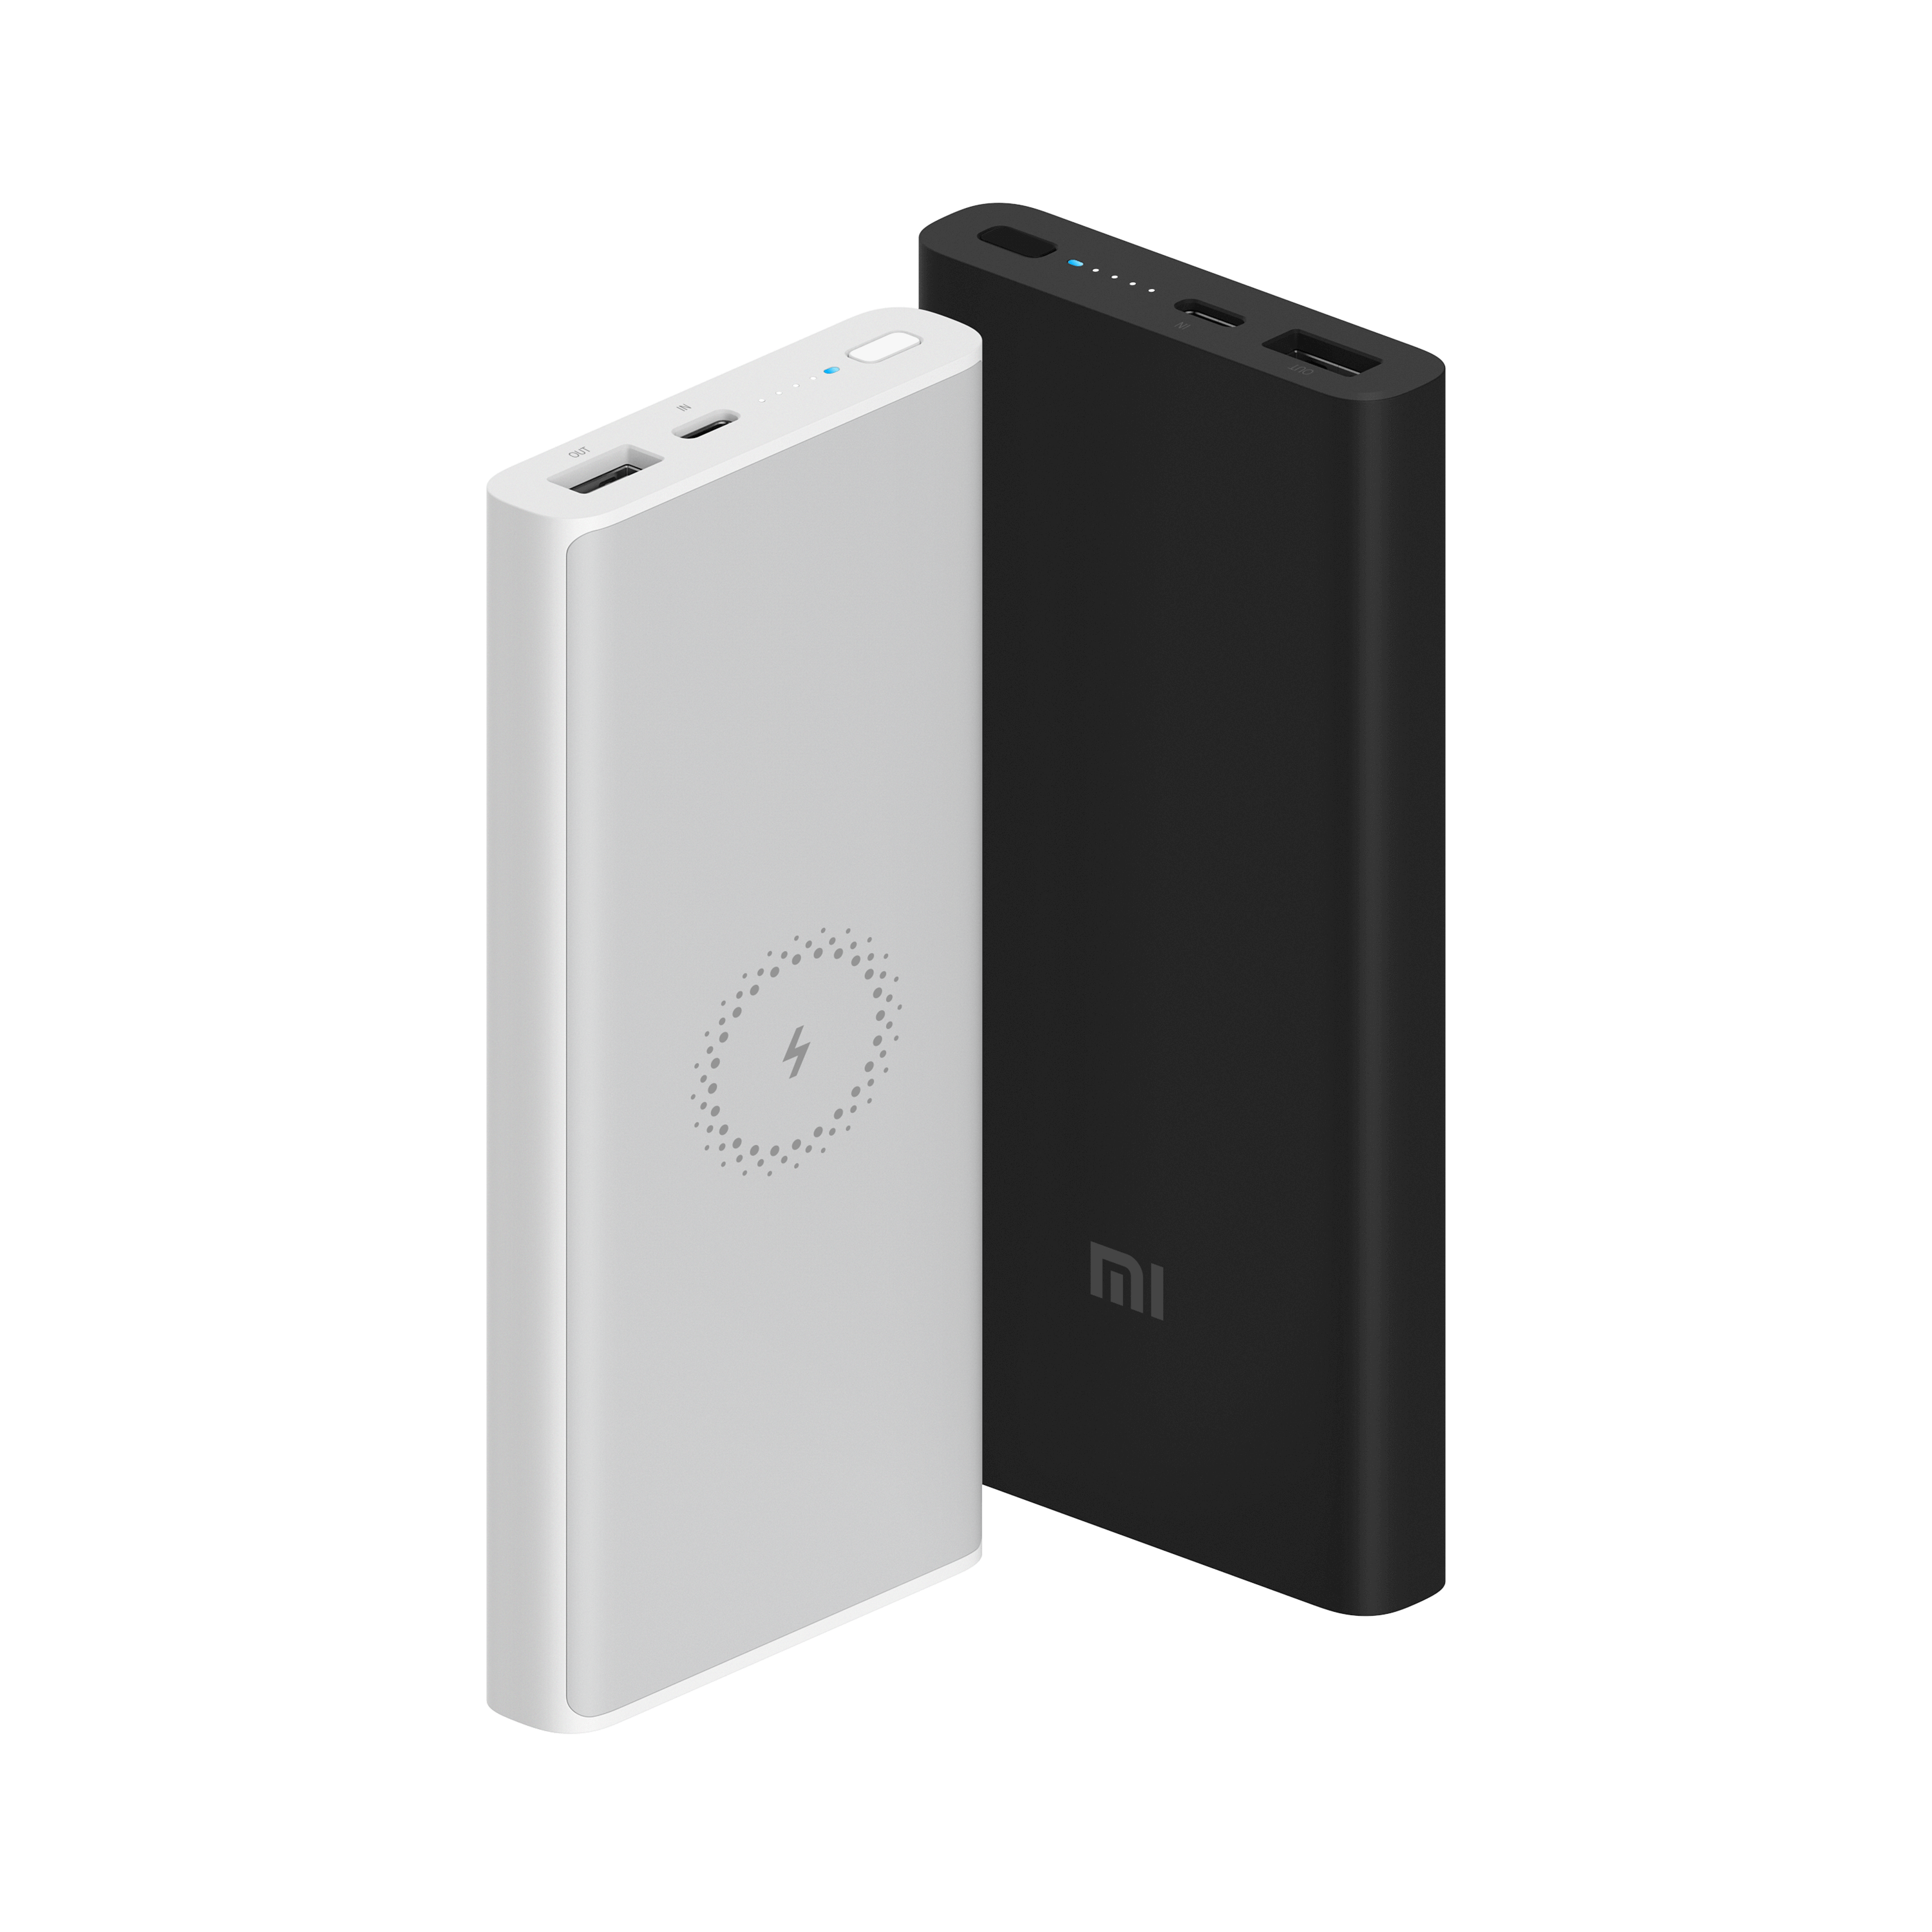 Xiaomi Mi 10000MAH Wireless Power Bank Essential - White